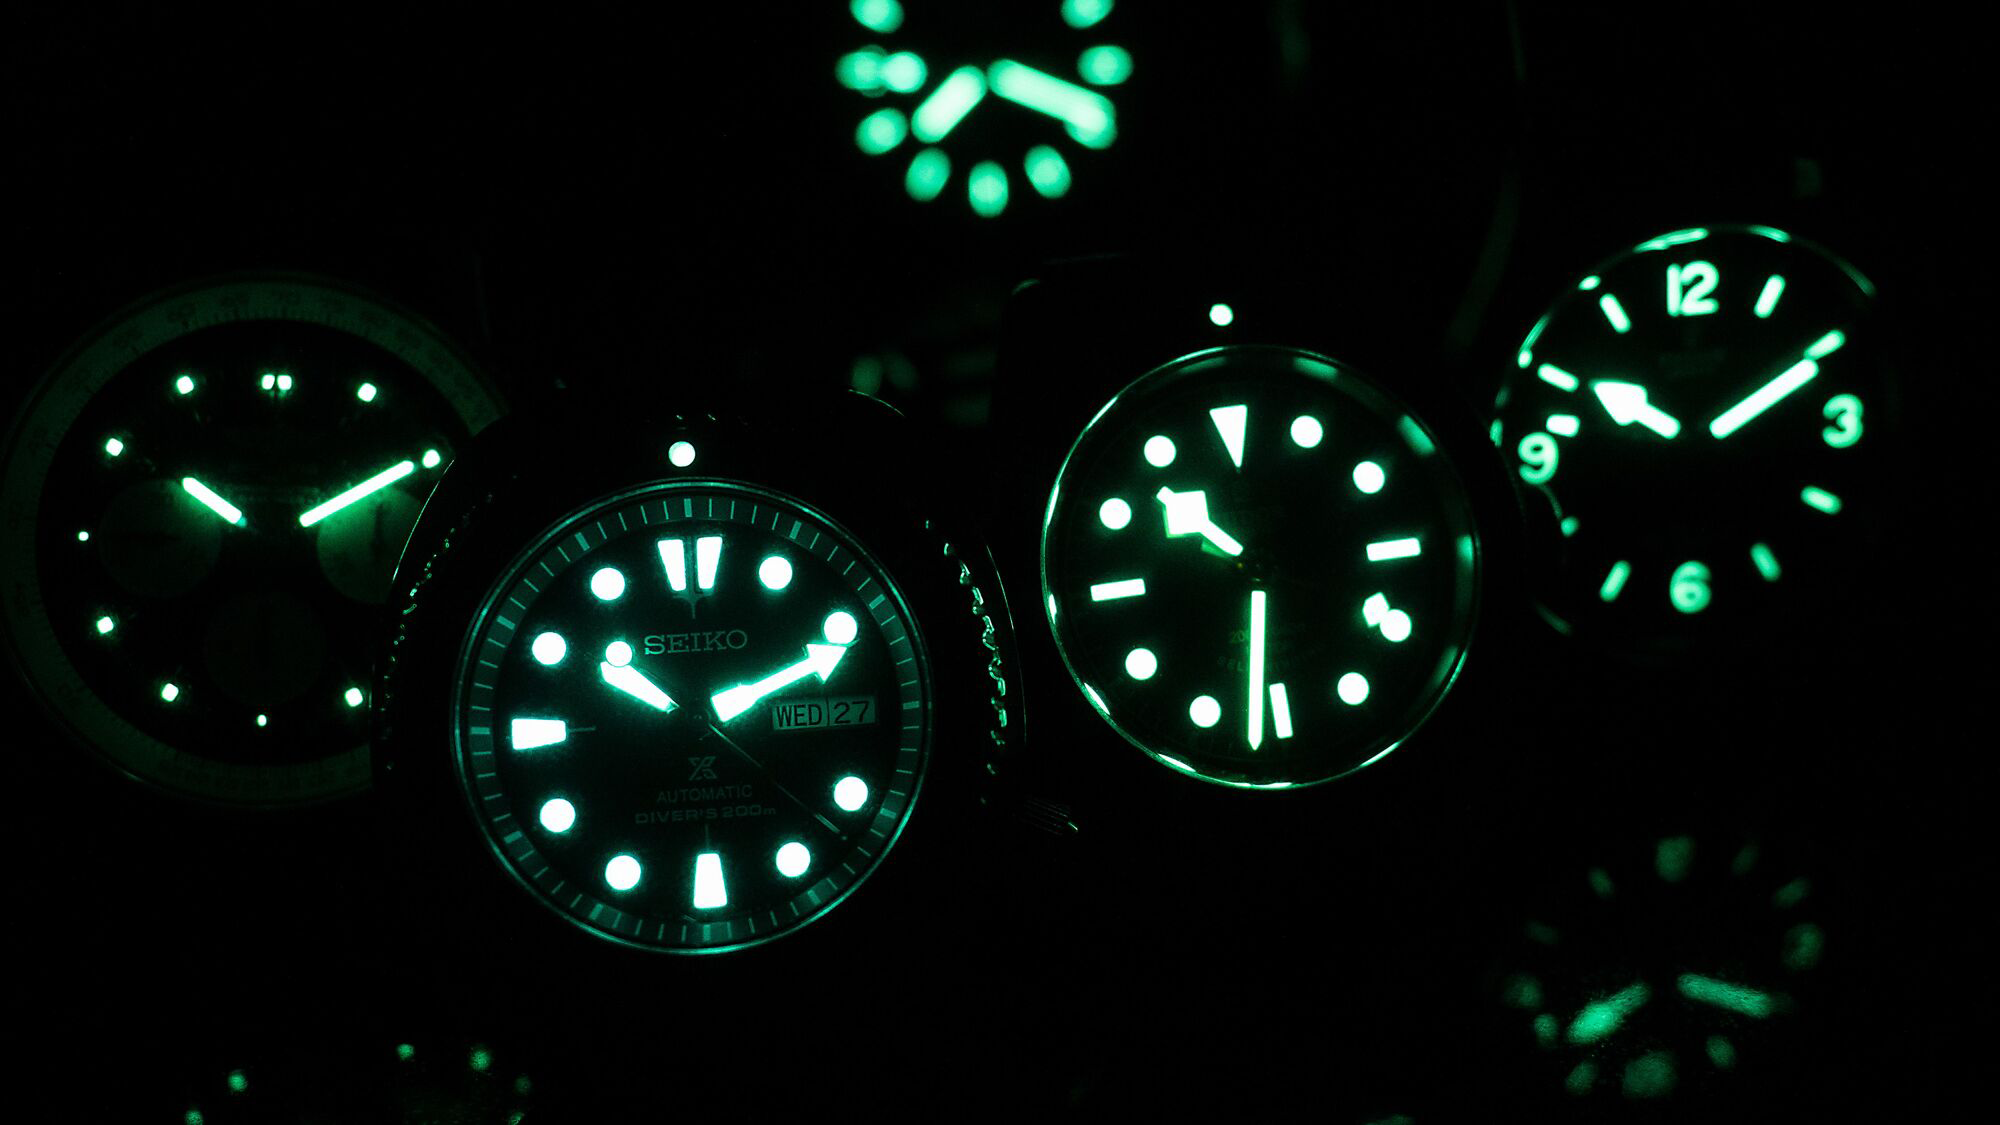 Hodinkee Luminous Dials Glow Watches Feature